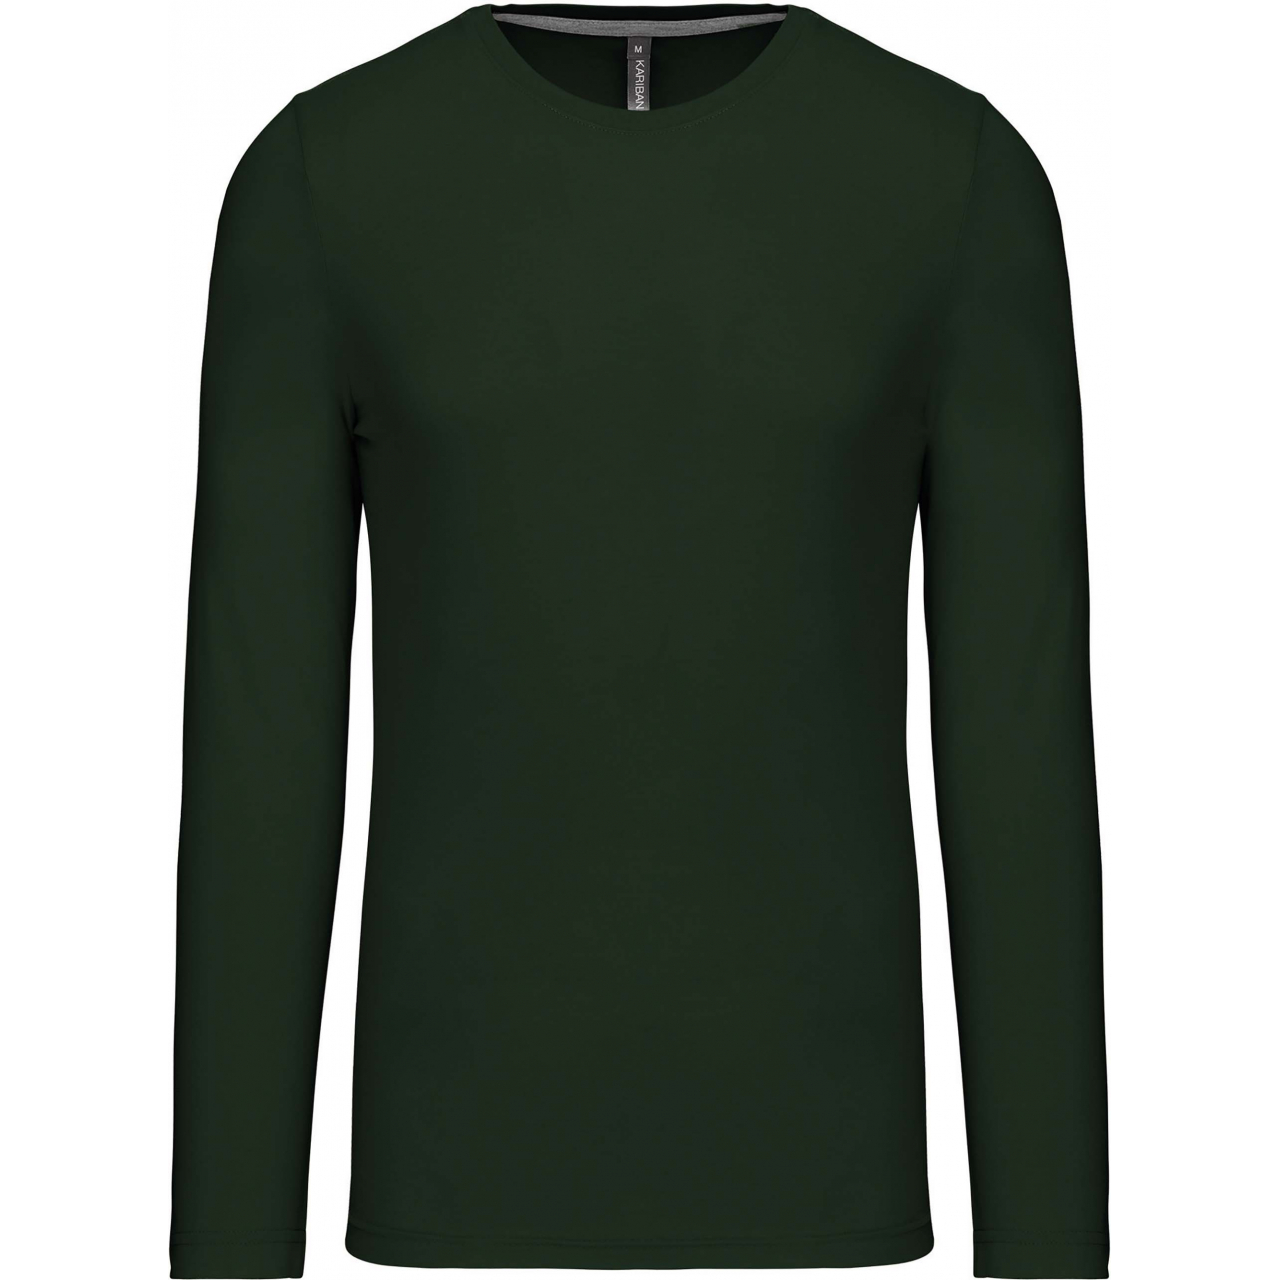 Pánské tričko Kariban dlouhý rukáv - tmavě zelené, 3XL